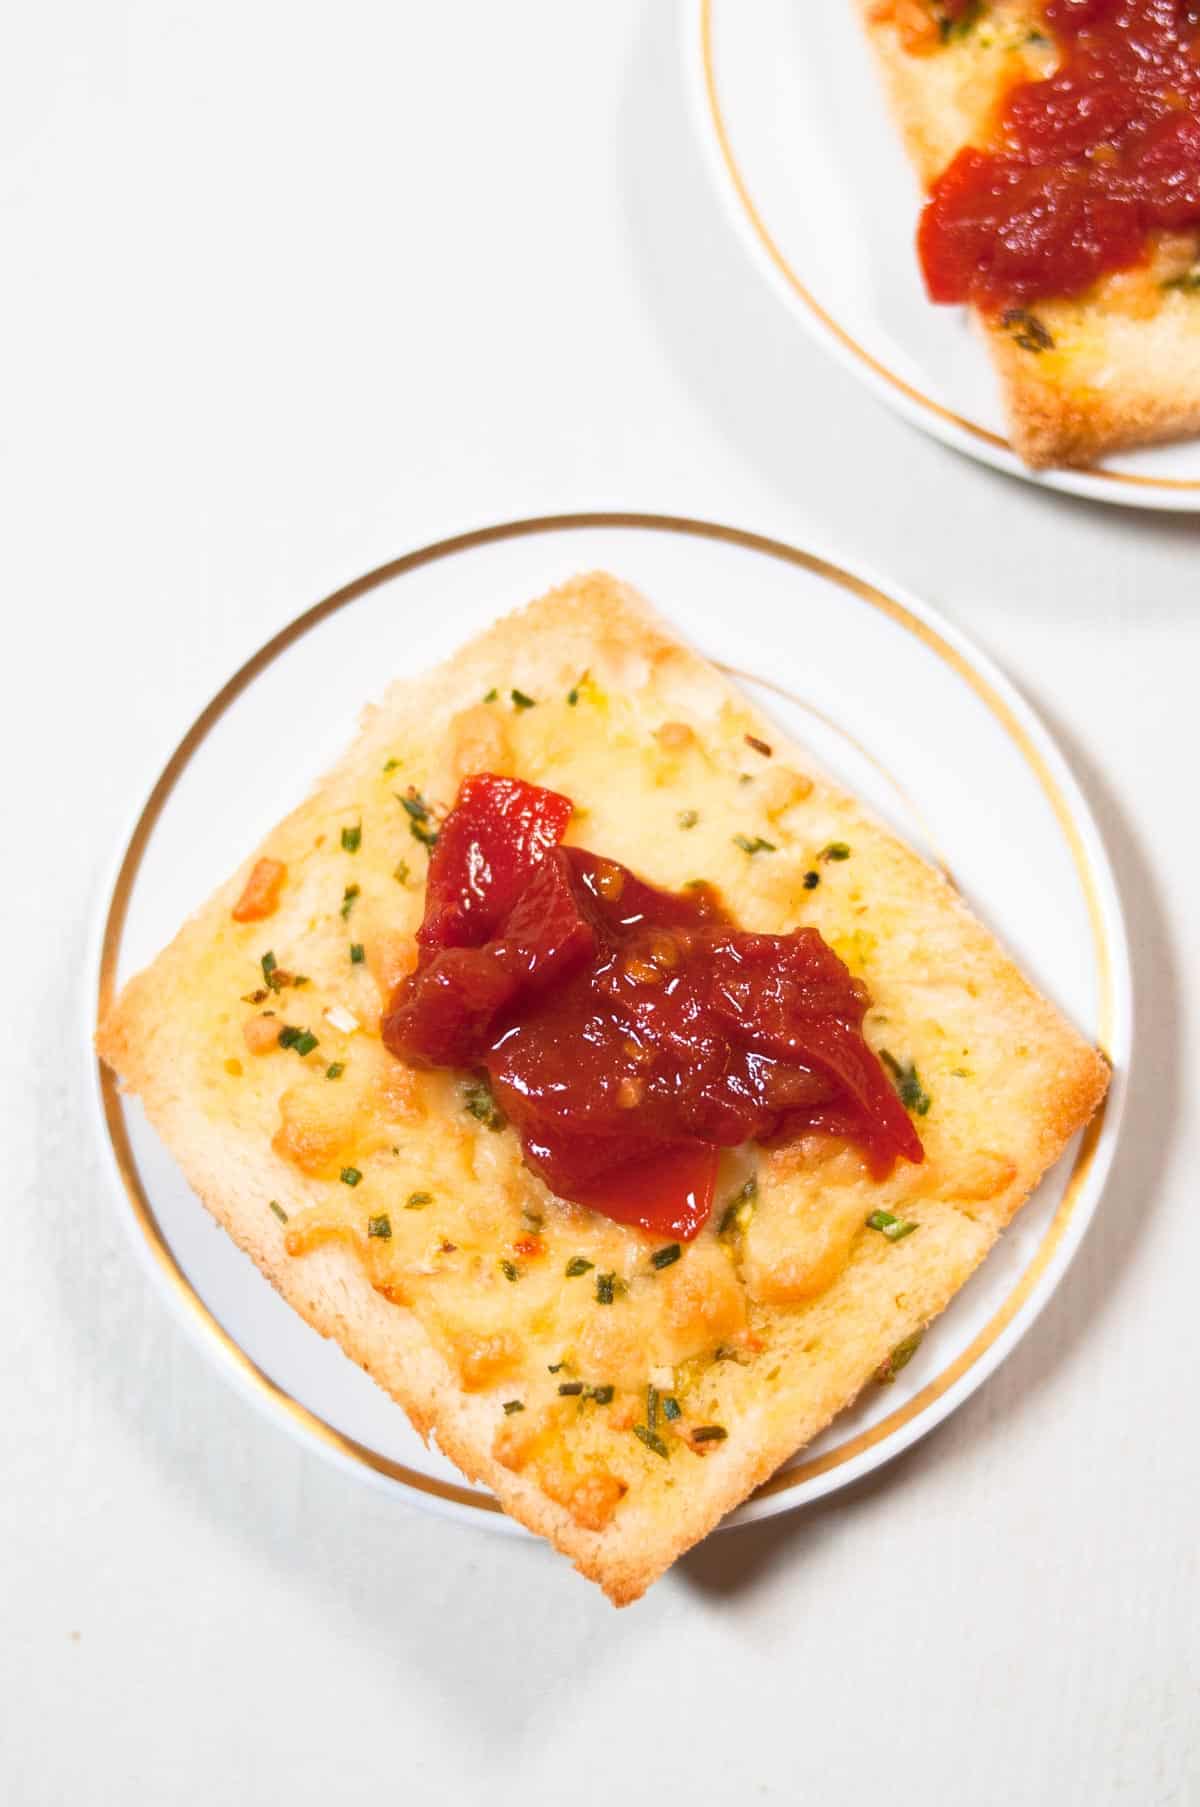 Tomato jam on a slice of cheese toast.